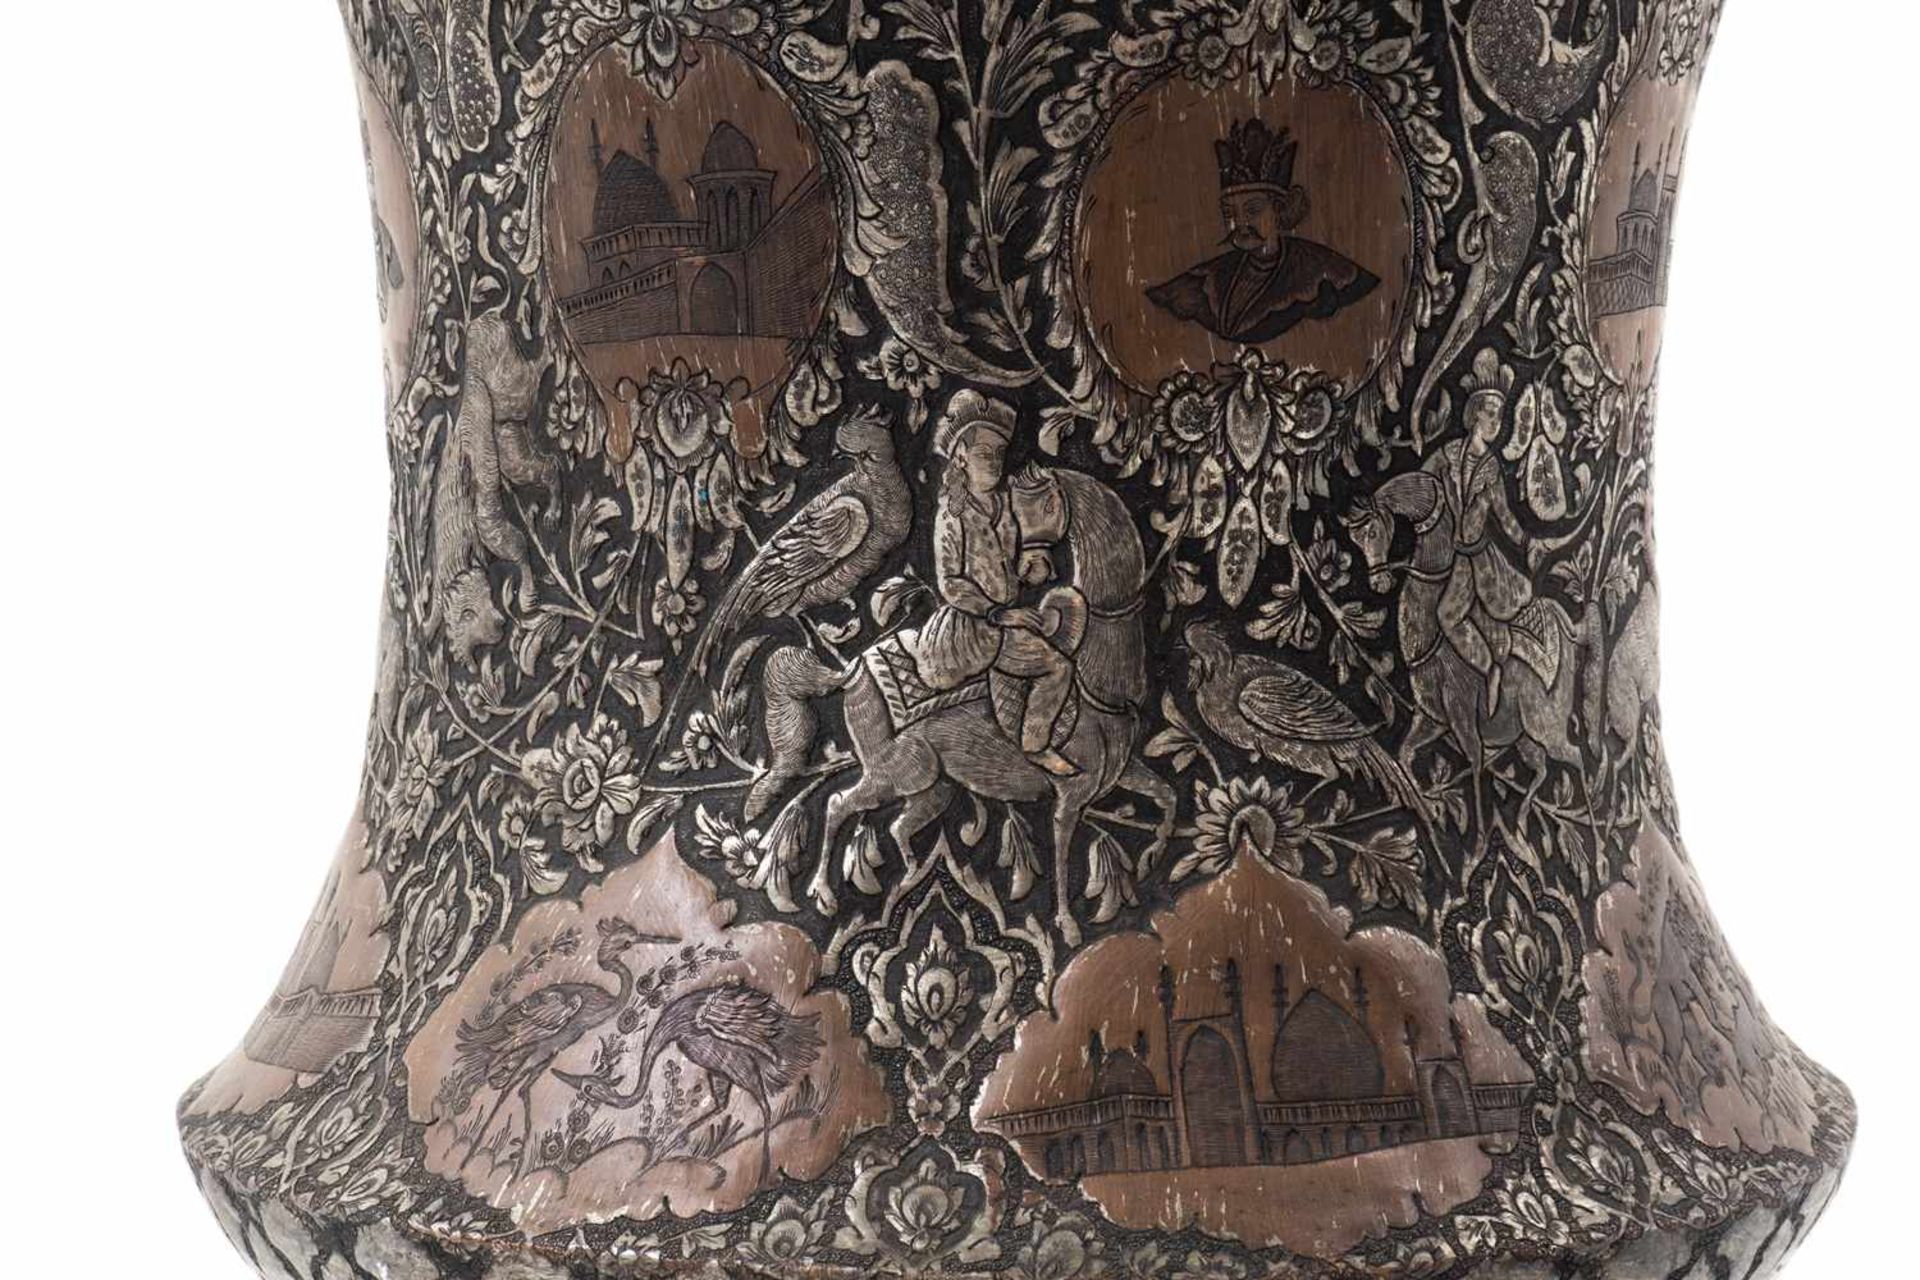 Pair of ornate amphorae vases - Image 11 of 14